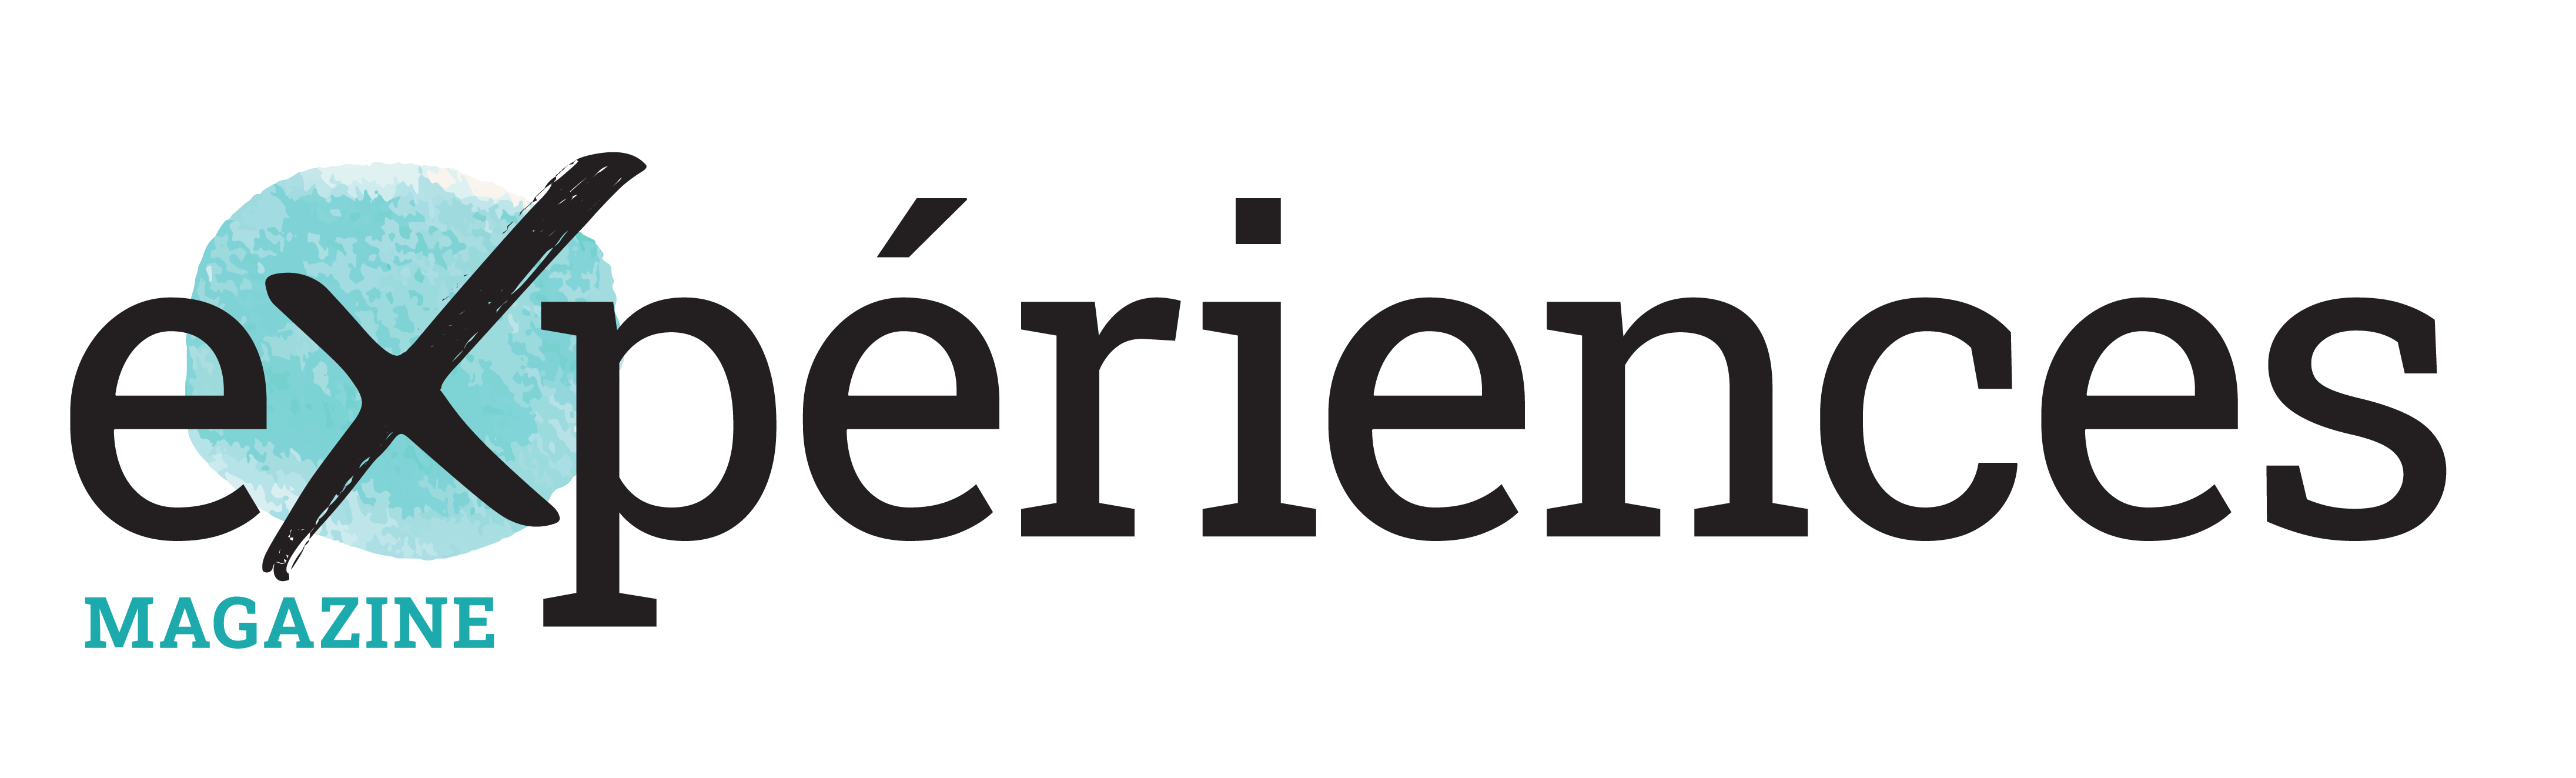 magazine Expériences logo